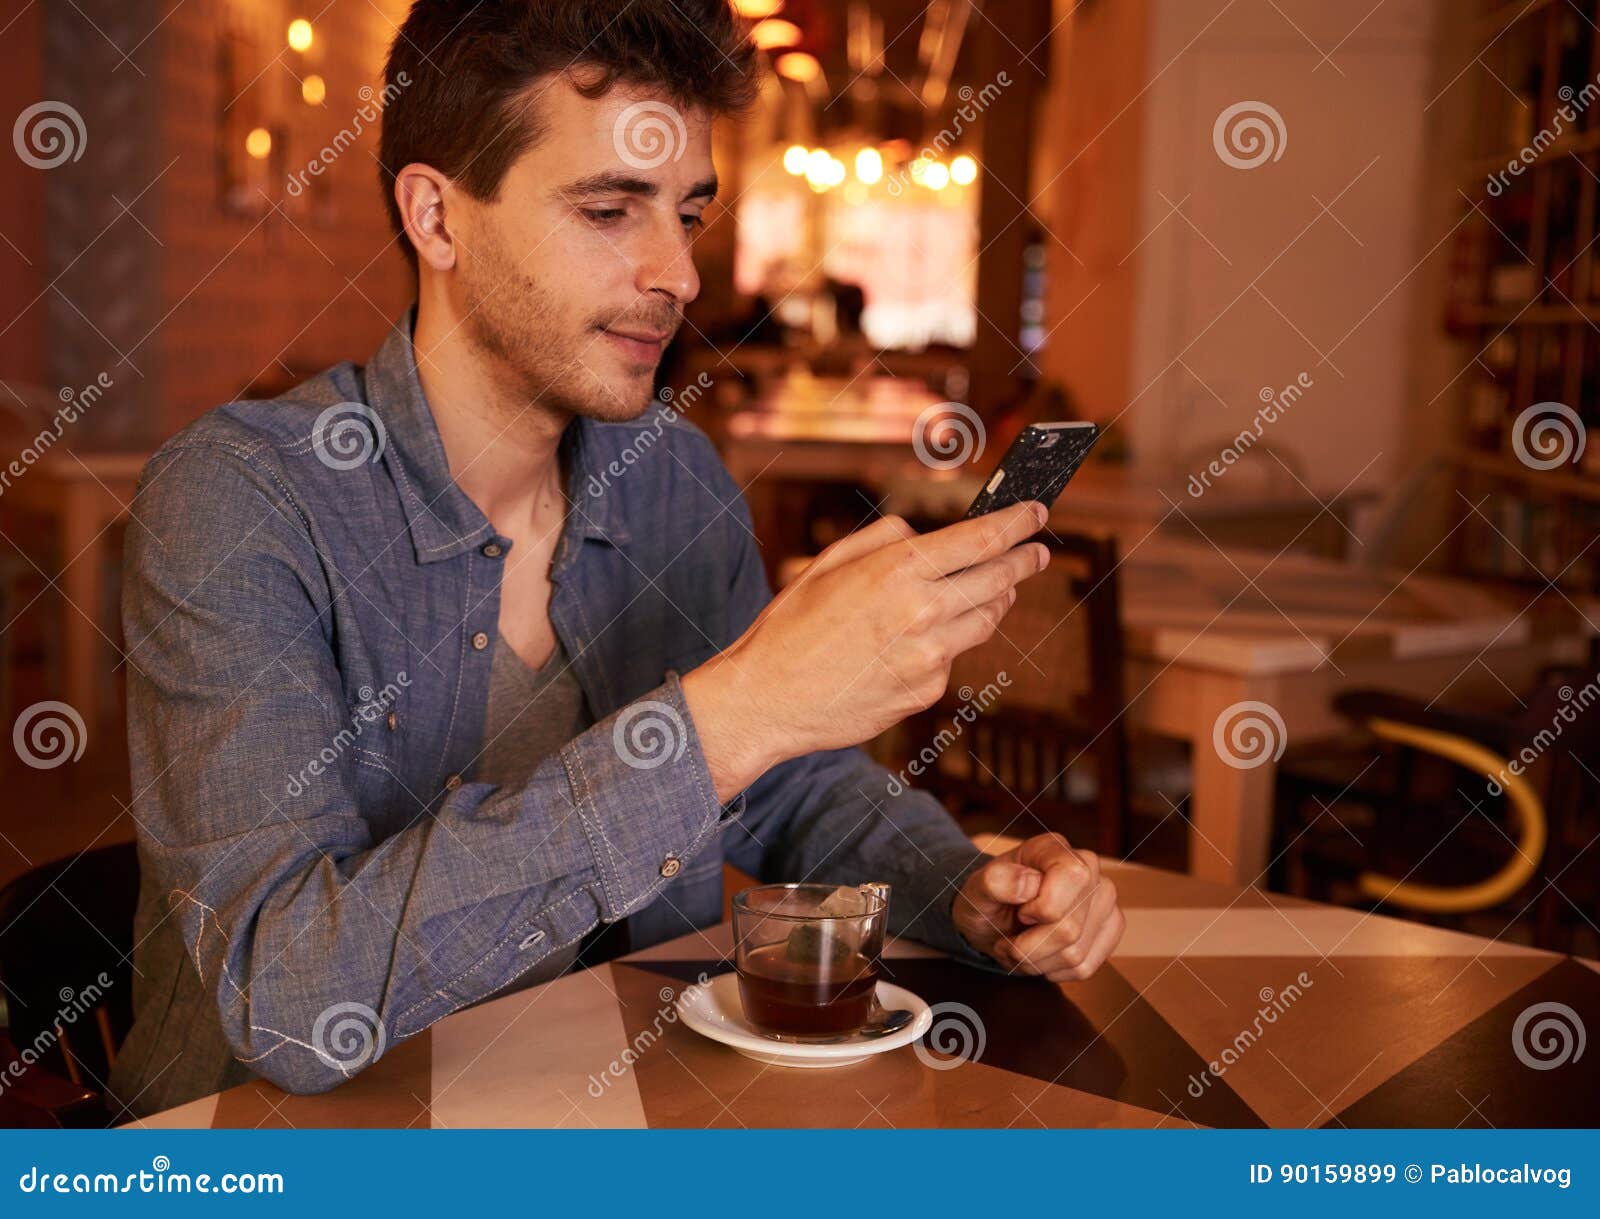 cute millenial male texting in restaurant